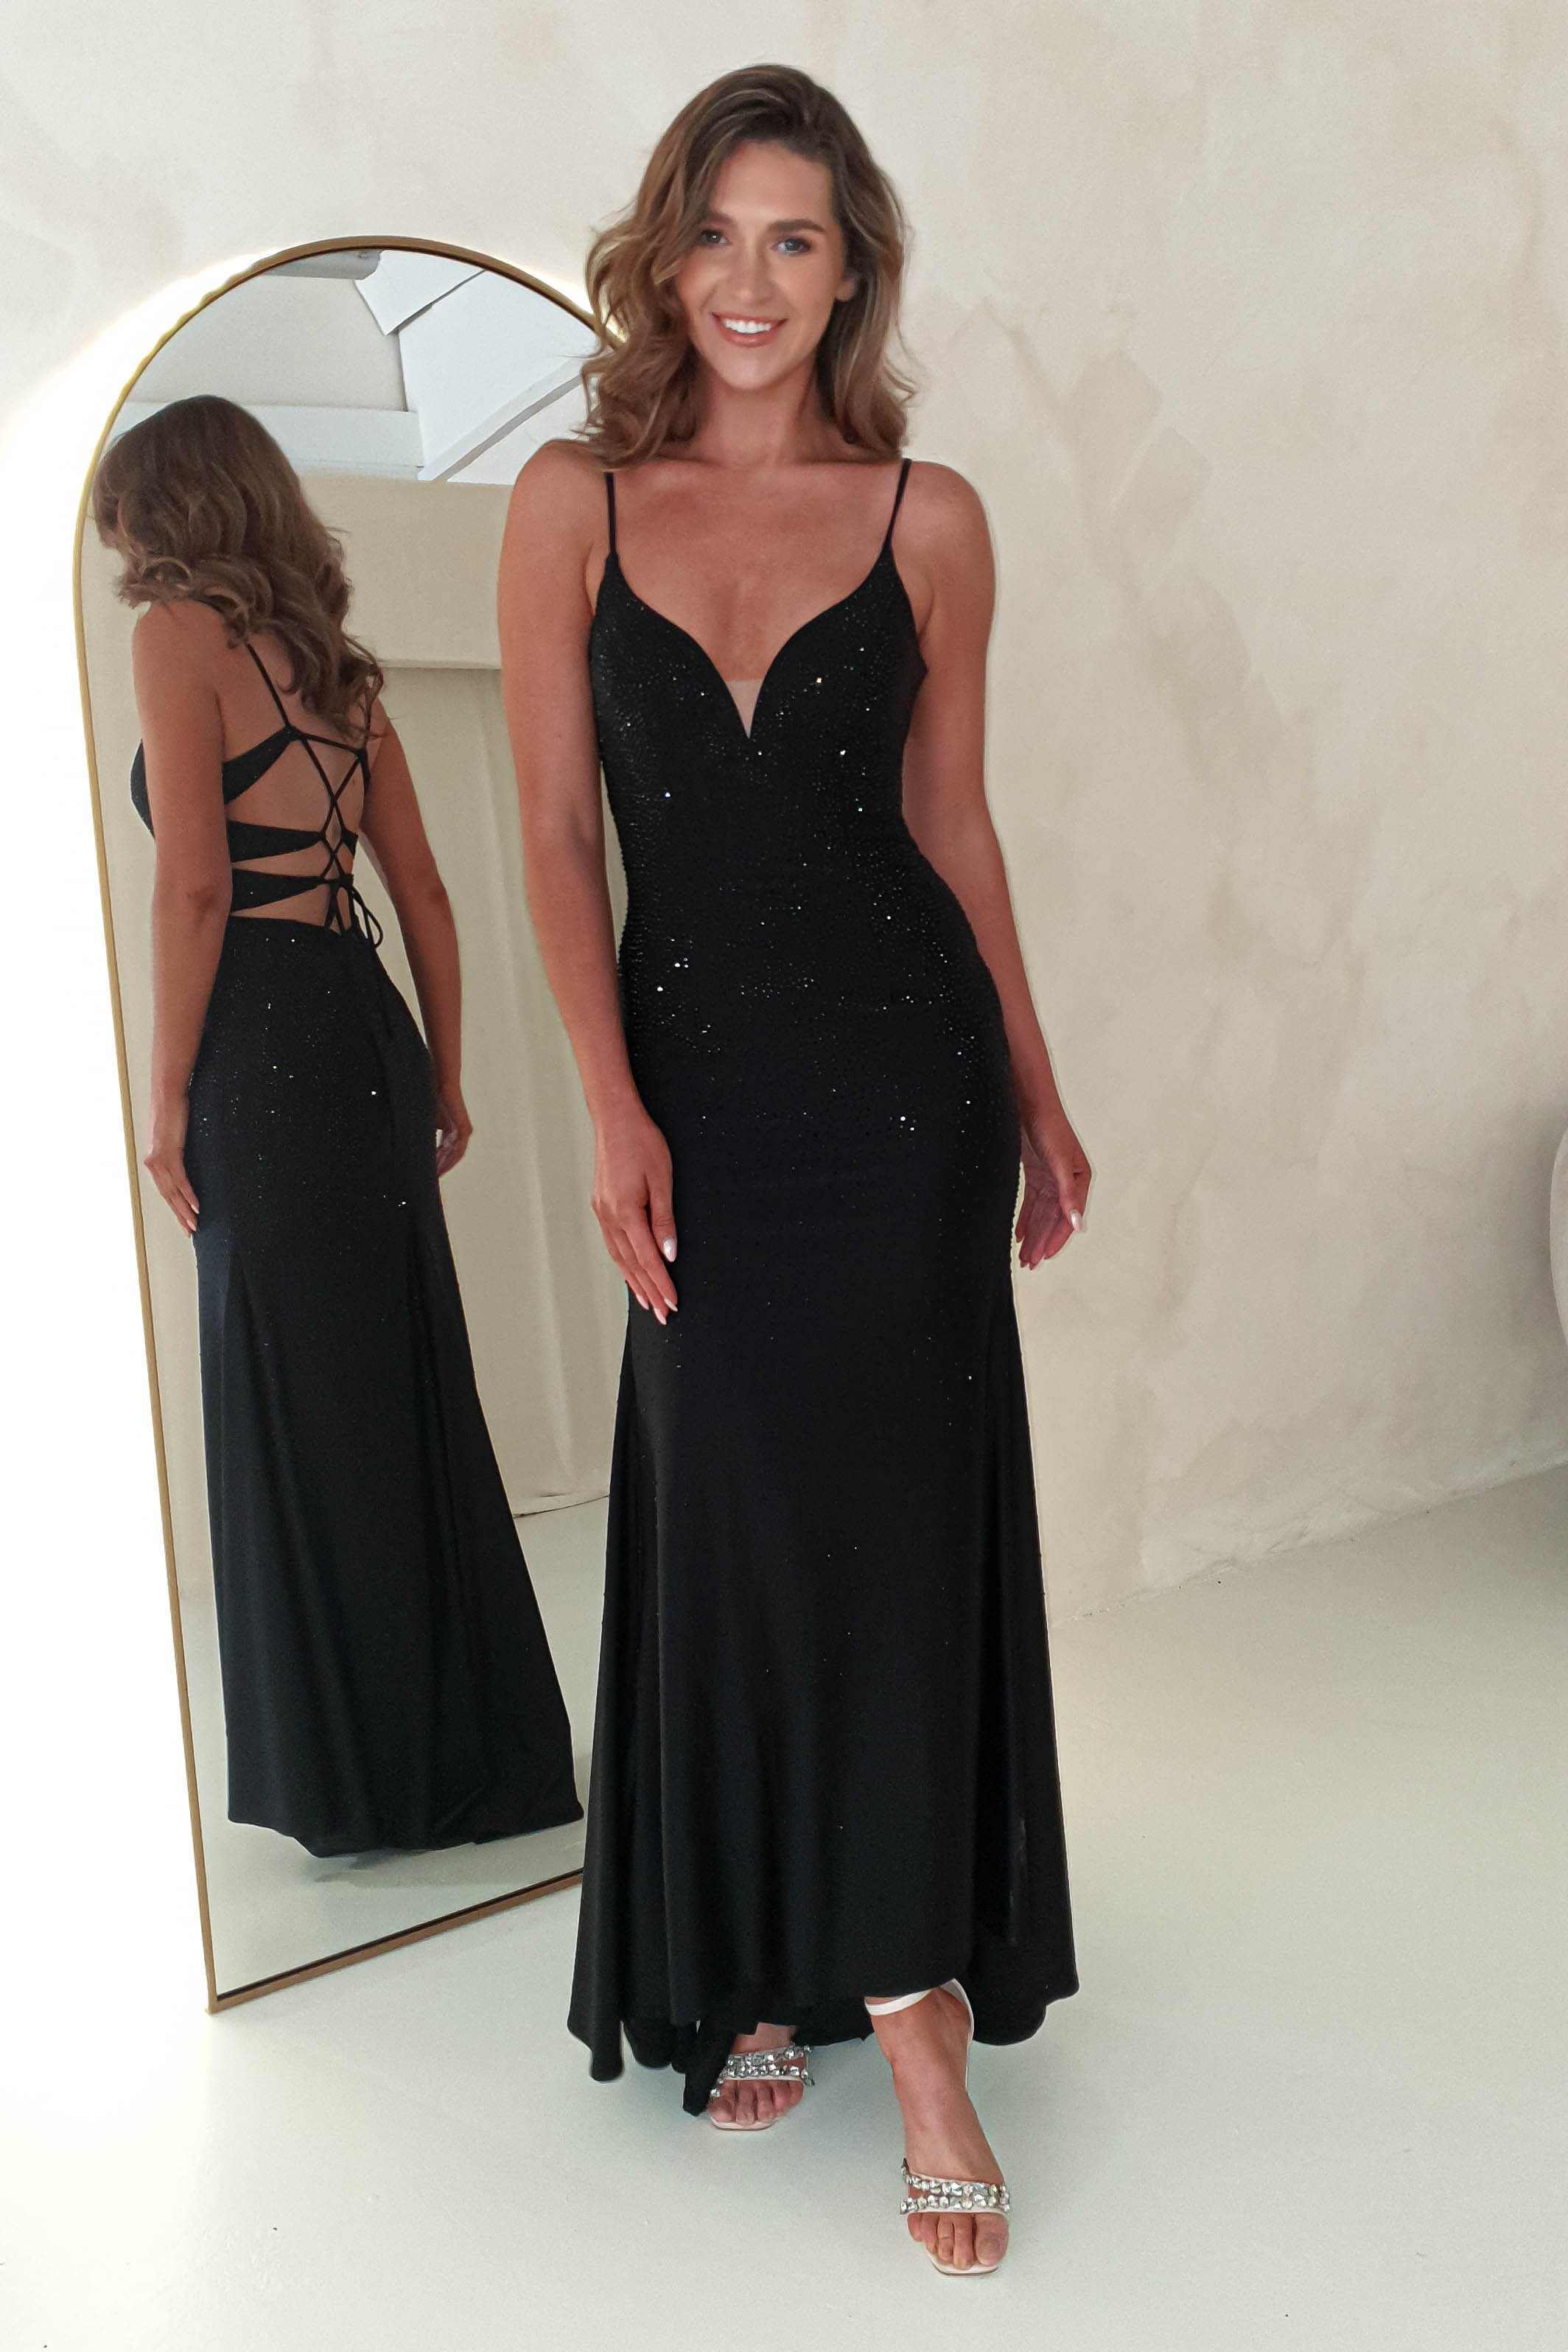 jennifer-diamante-bodycon-gown-black-dresses-52305739776341.jpg